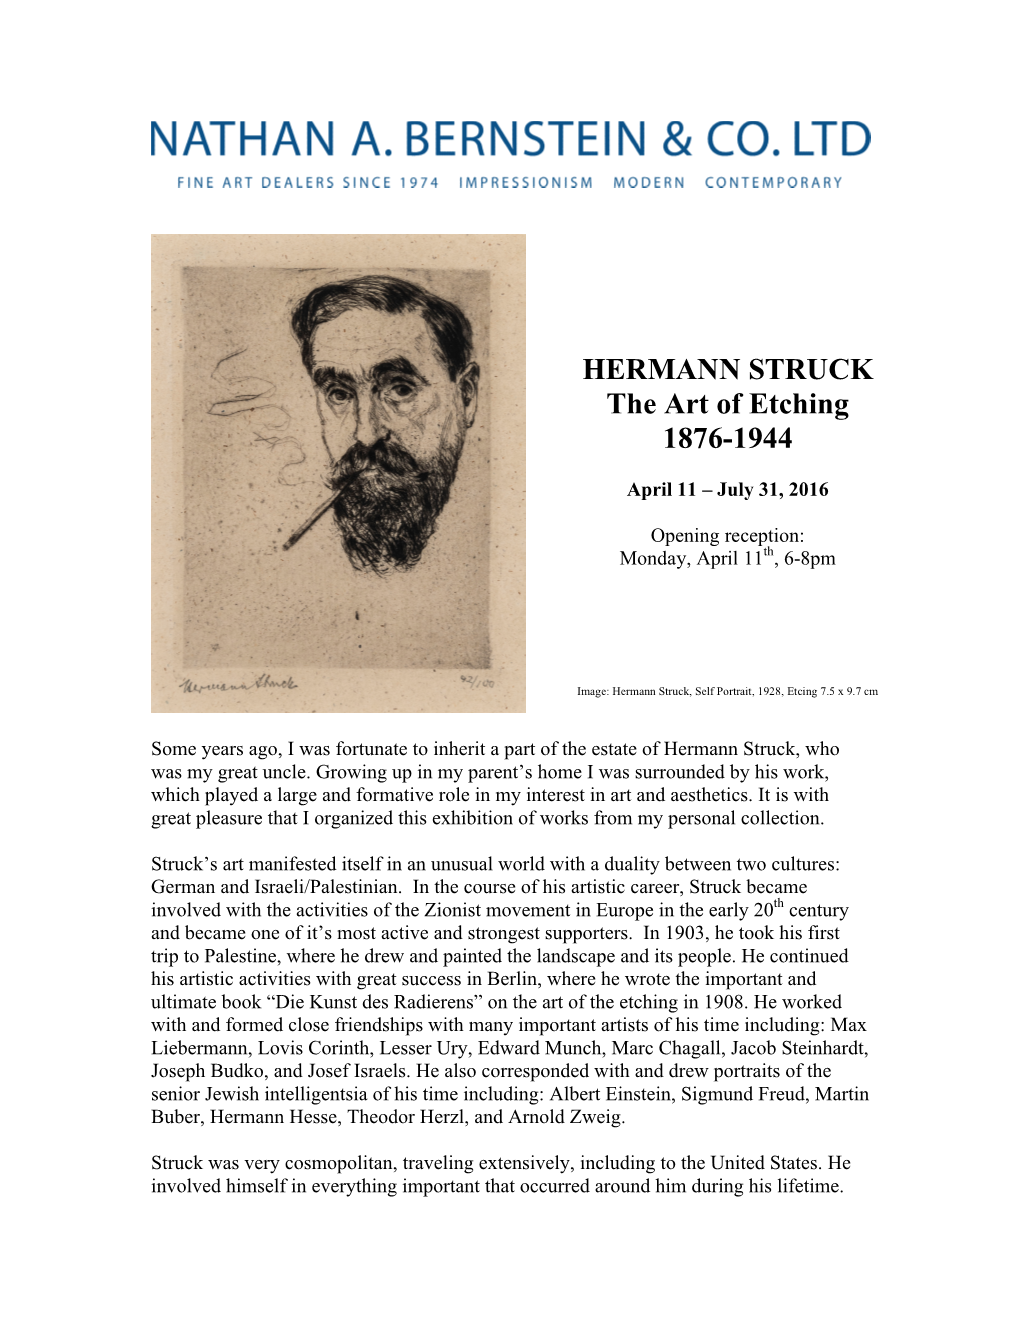 HERMANN STRUCK the Art of Etching 1876-1944